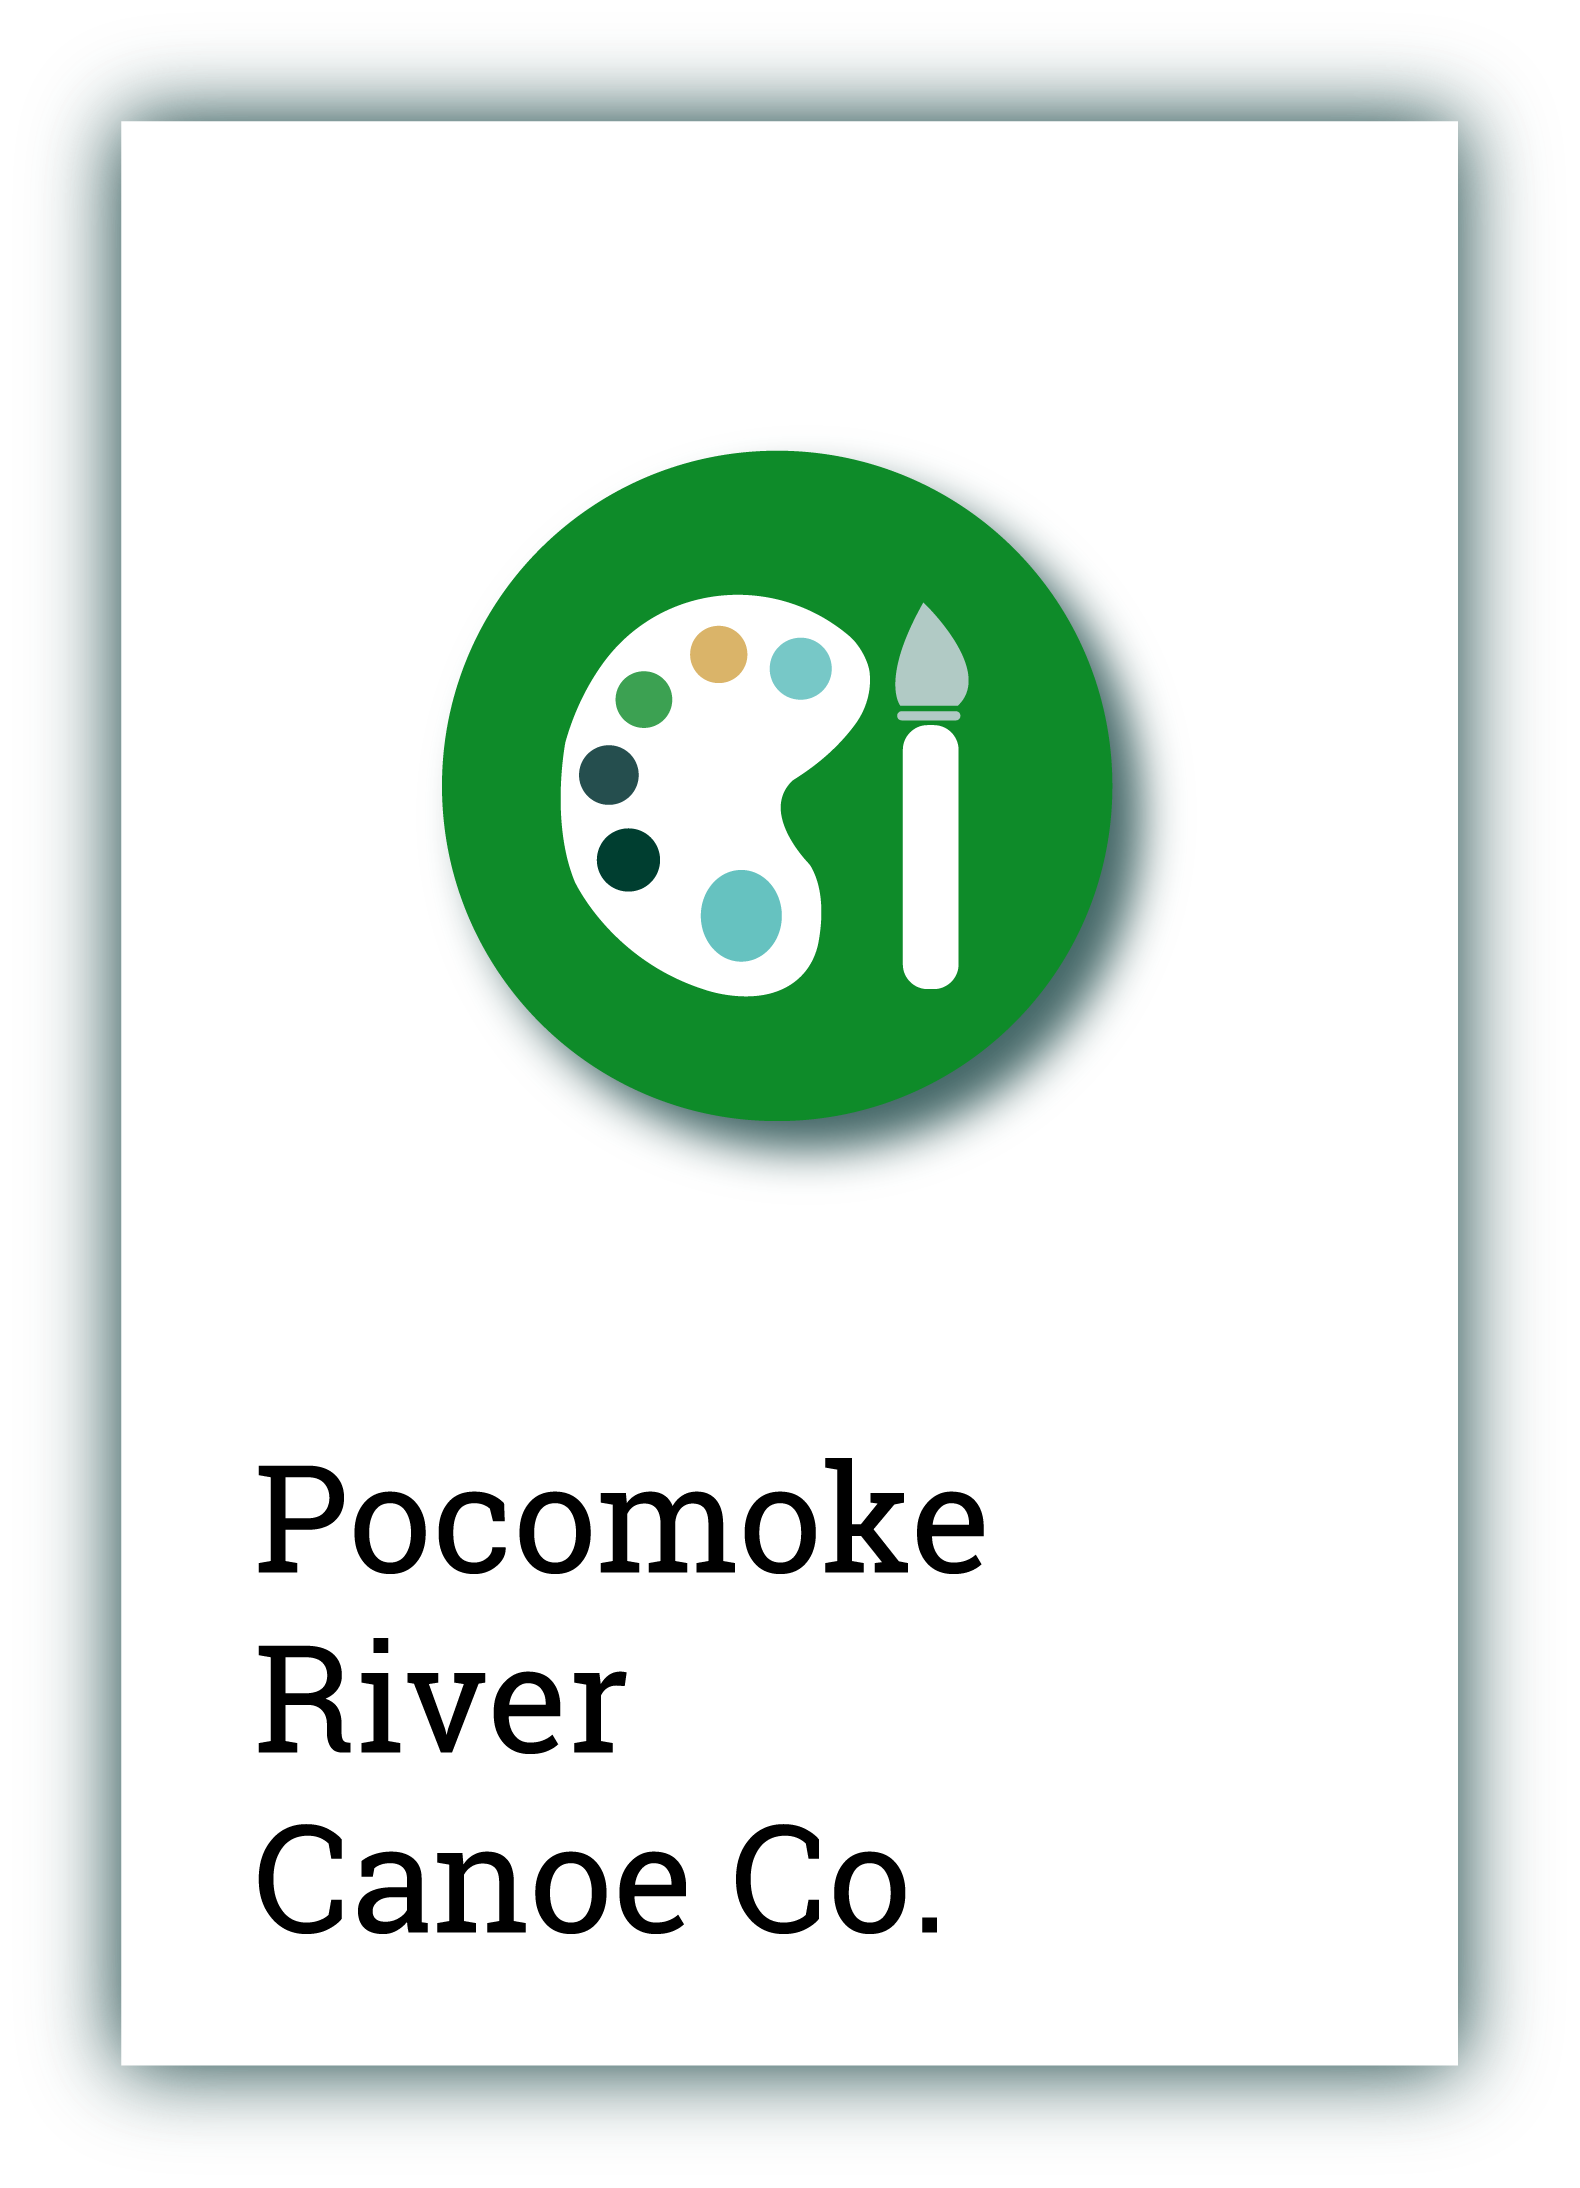 Pocomoke River Canoe Co 2